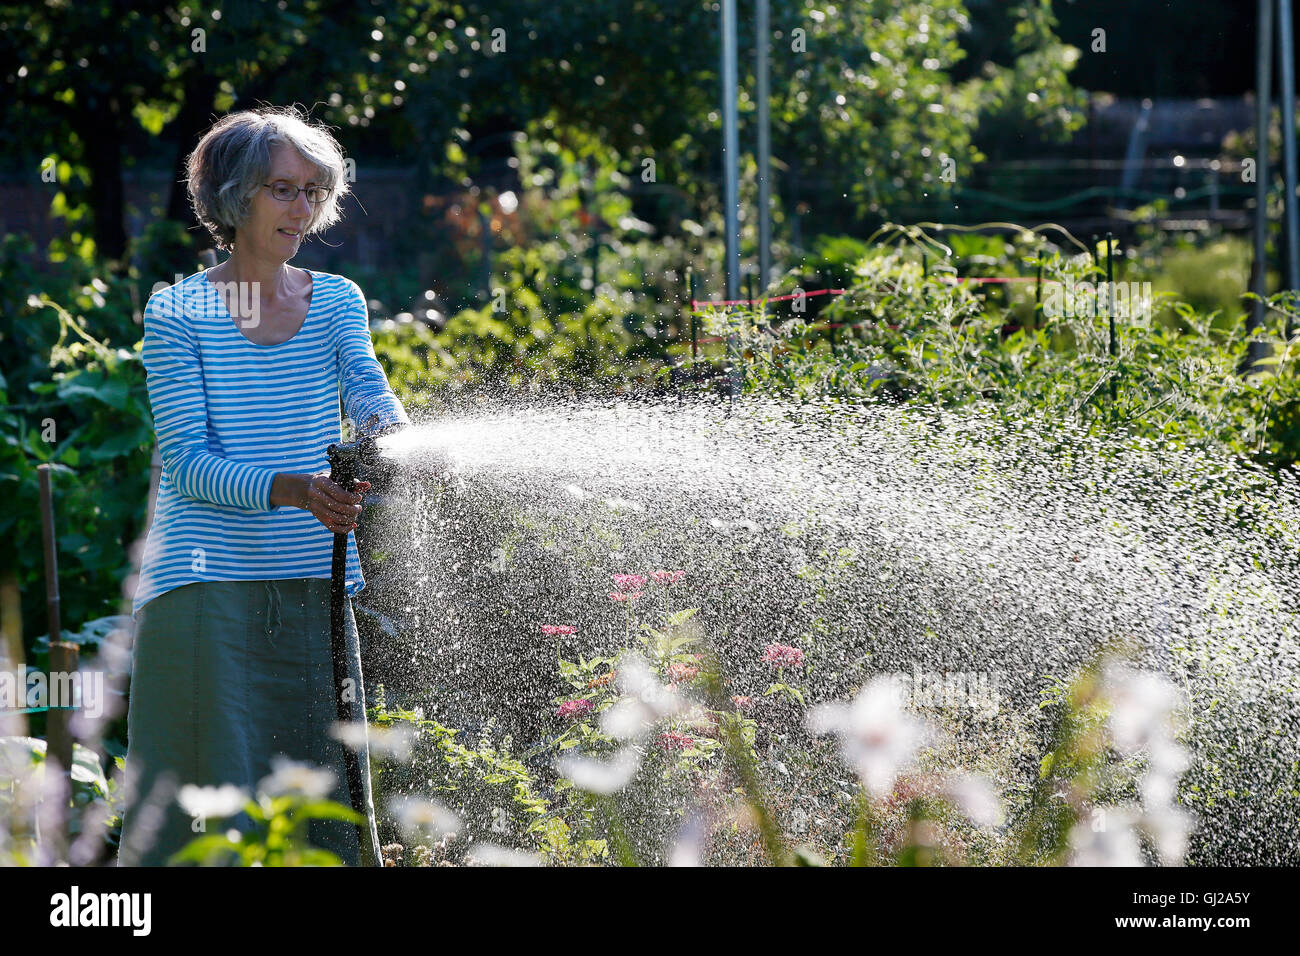 Woman watering a garden Stock Photo